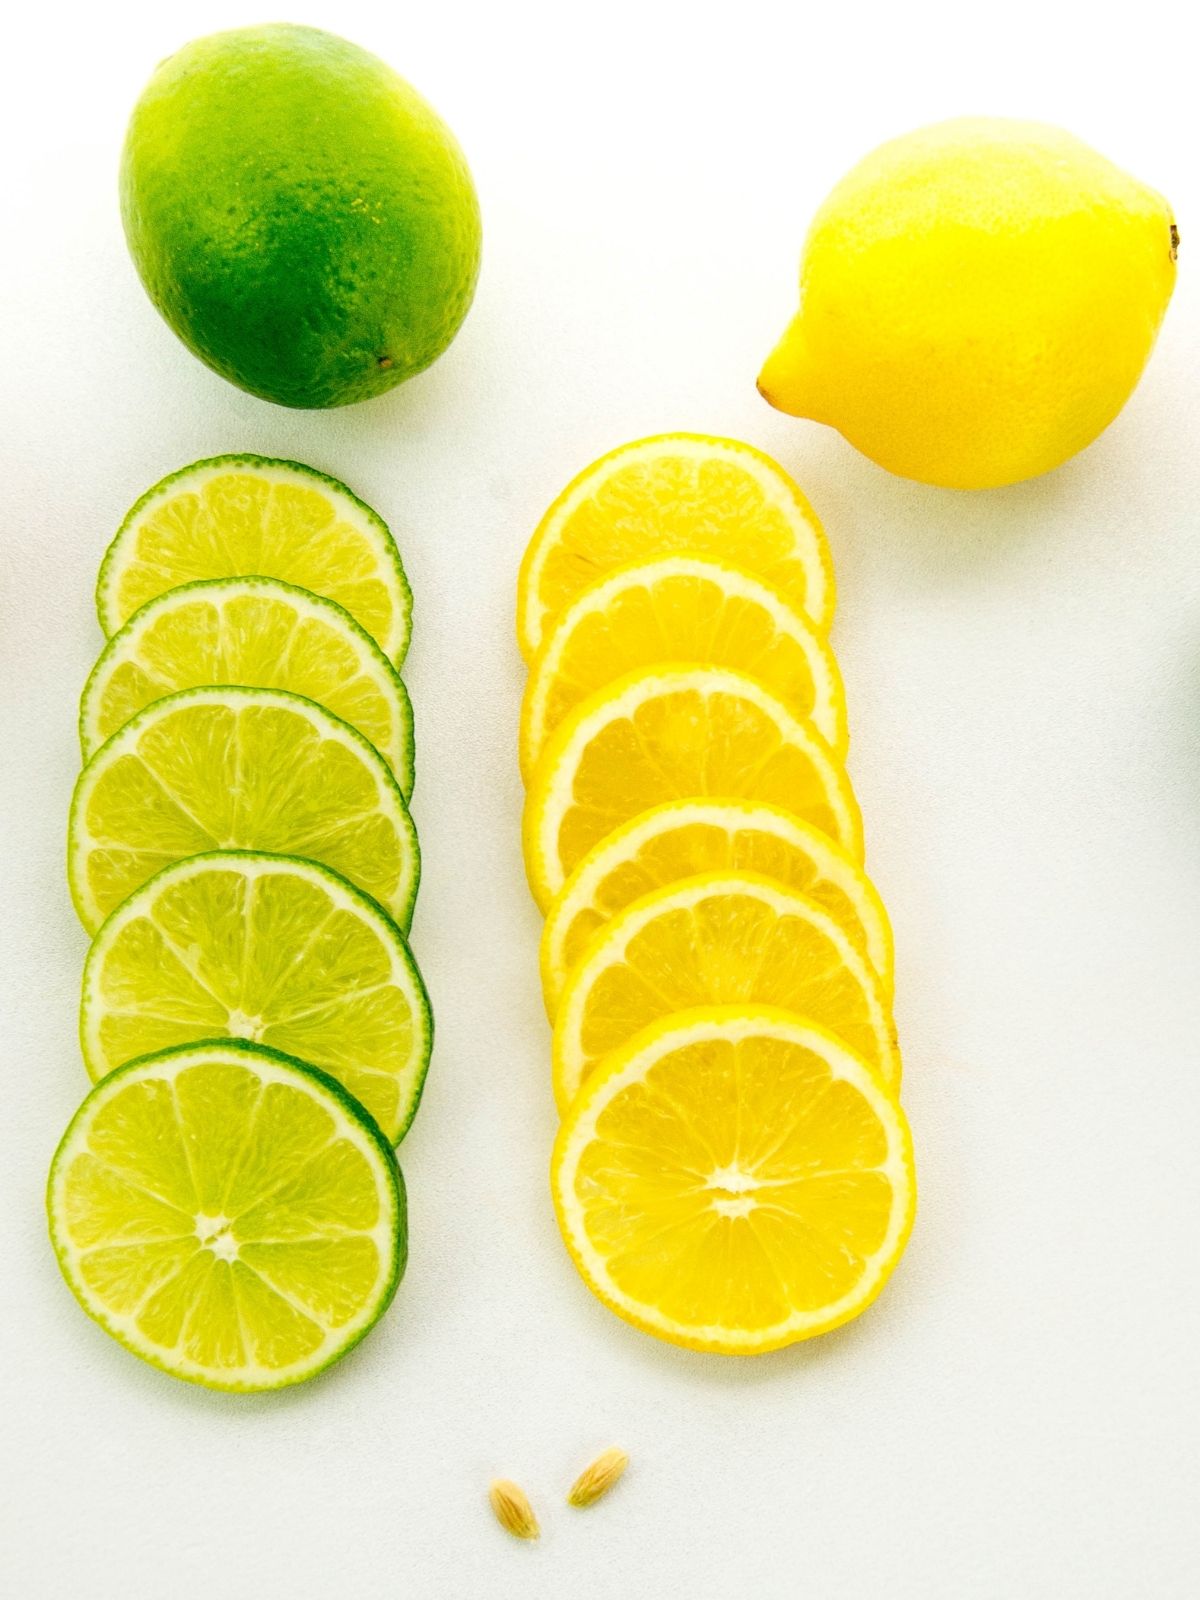 Lemon and lime slices.